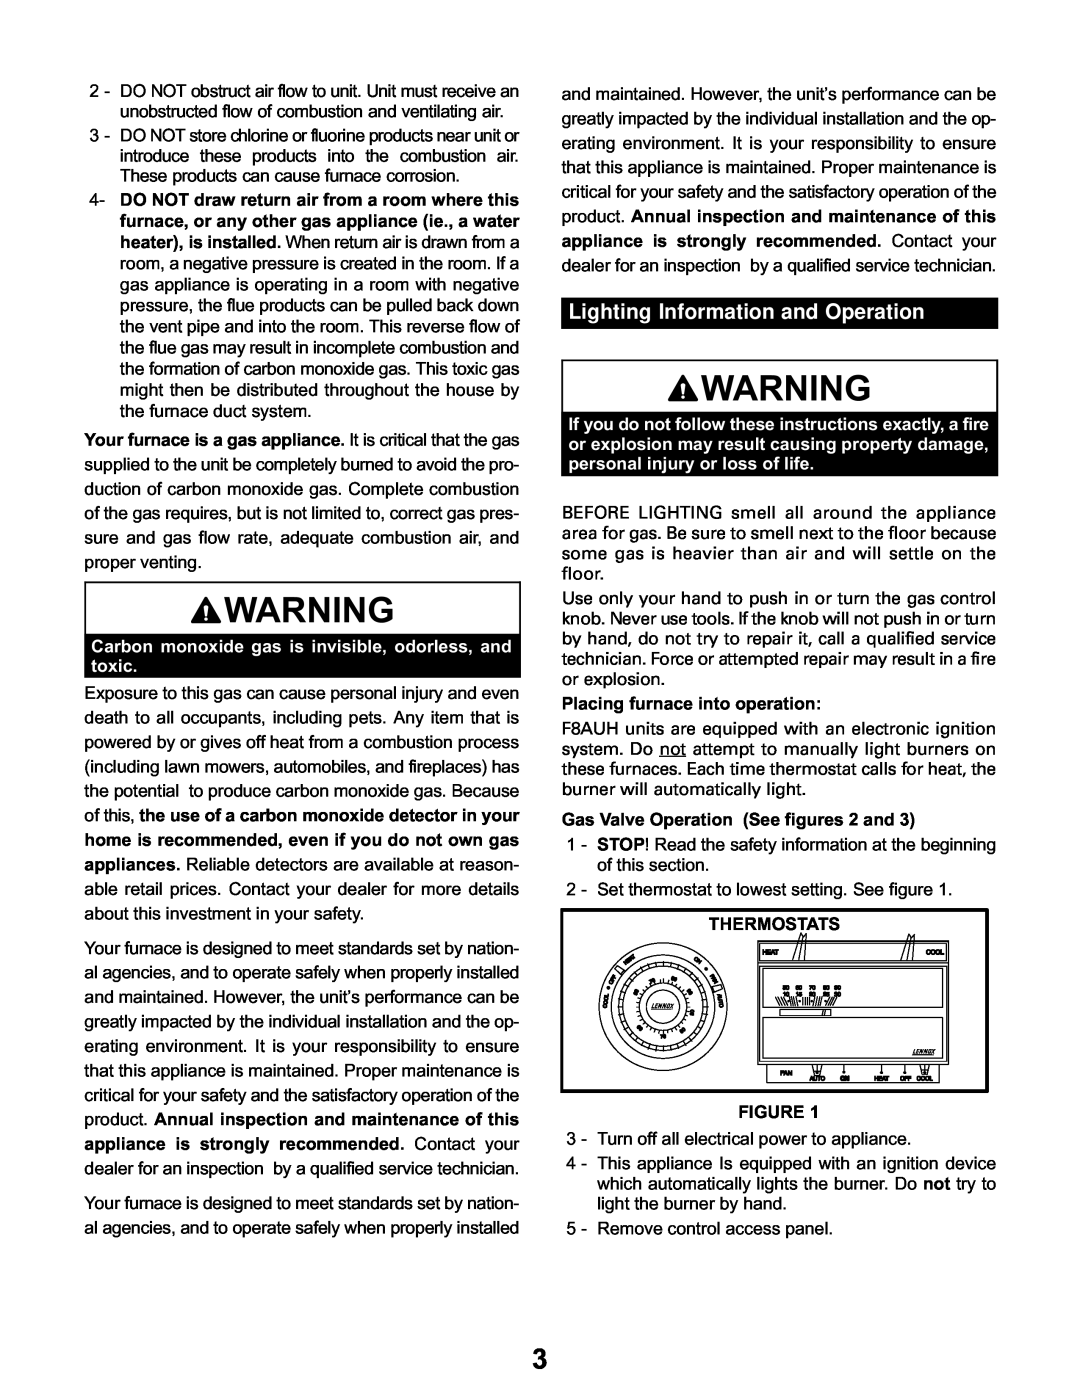 Lennox International Inc F8AUH manual Lighting Information and Operation 